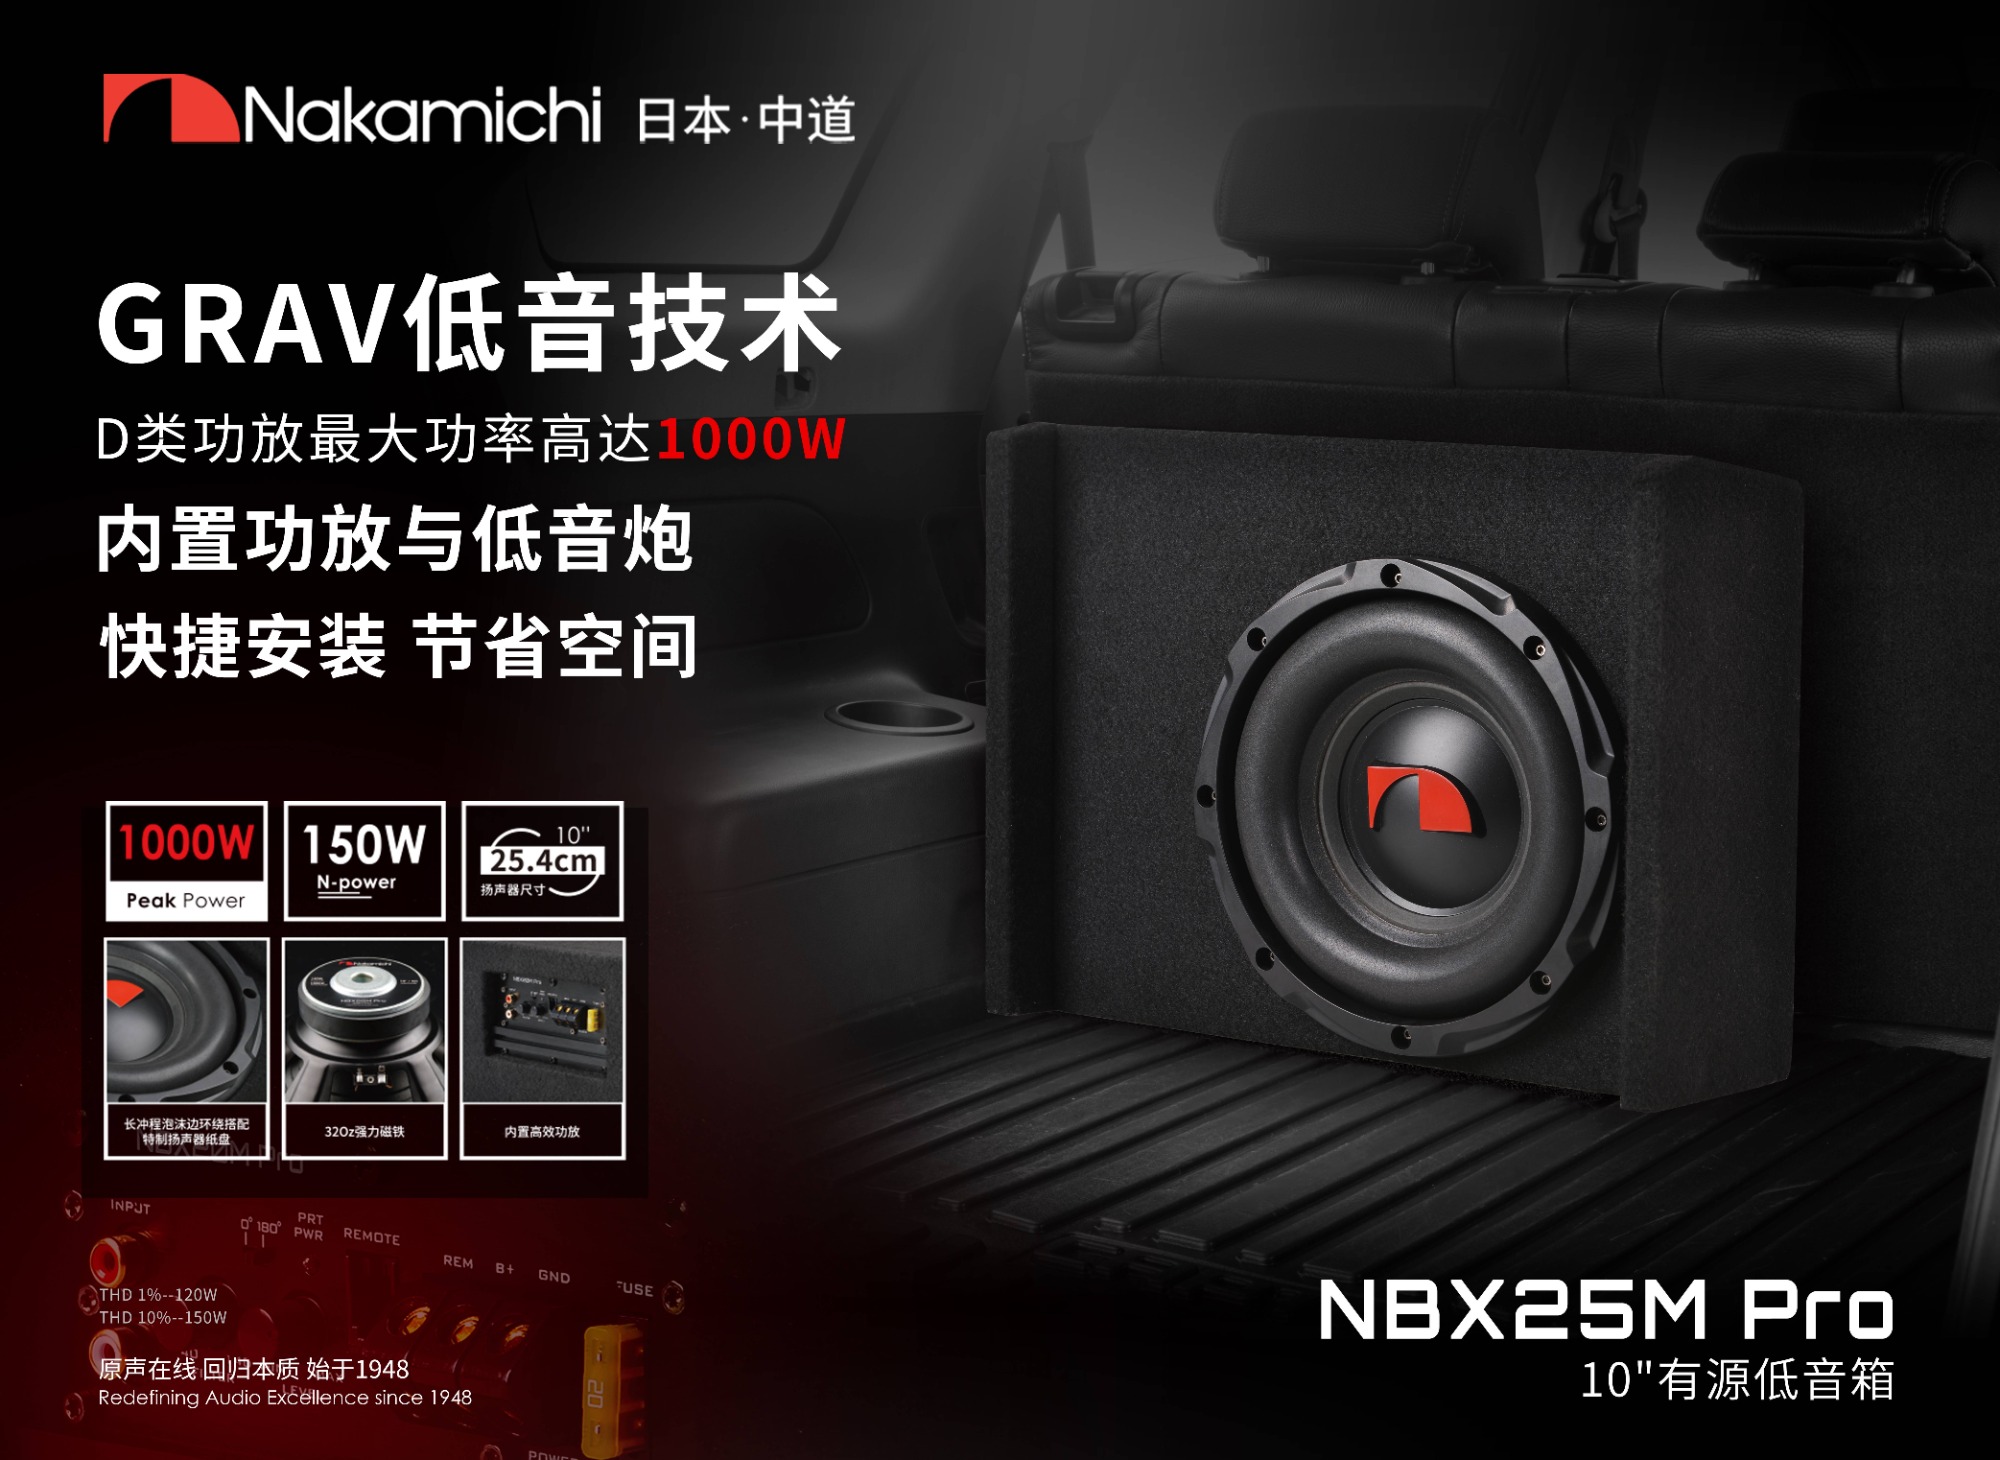 Nakamichi中道 NBX25M PRO 10"有源低音箱